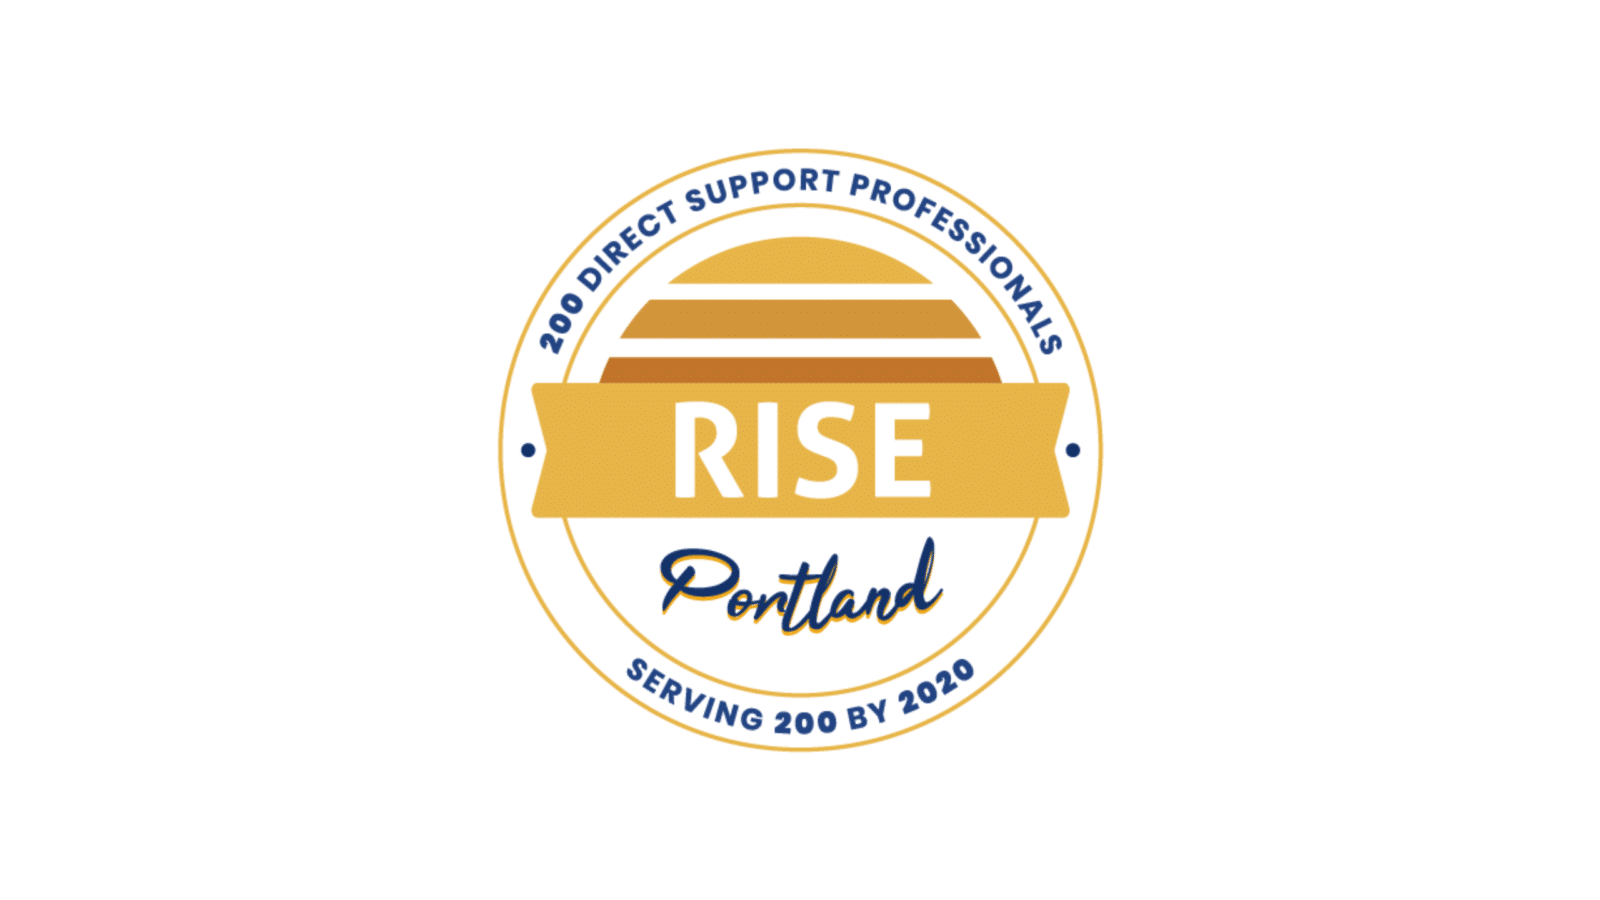 RISE is Hiring in the Portland Metro Area!